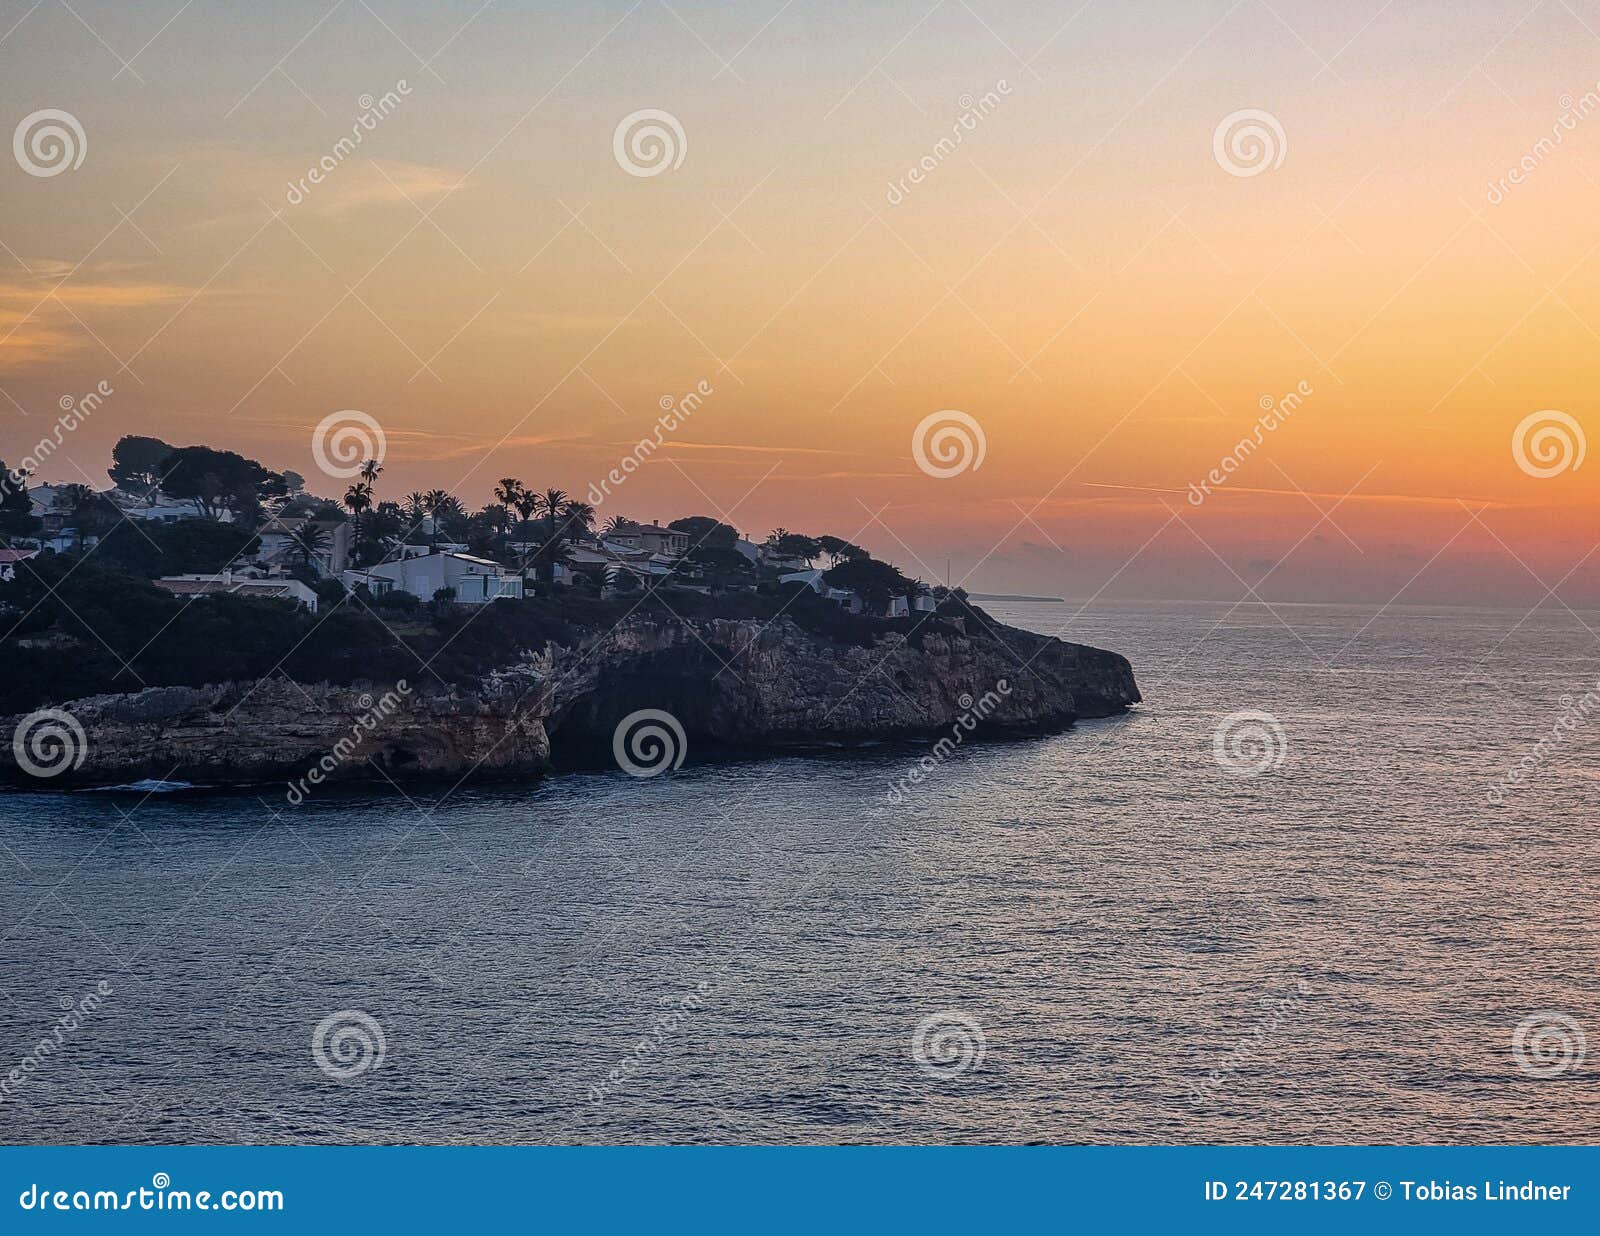 island in the mediterranien sea during sunrise